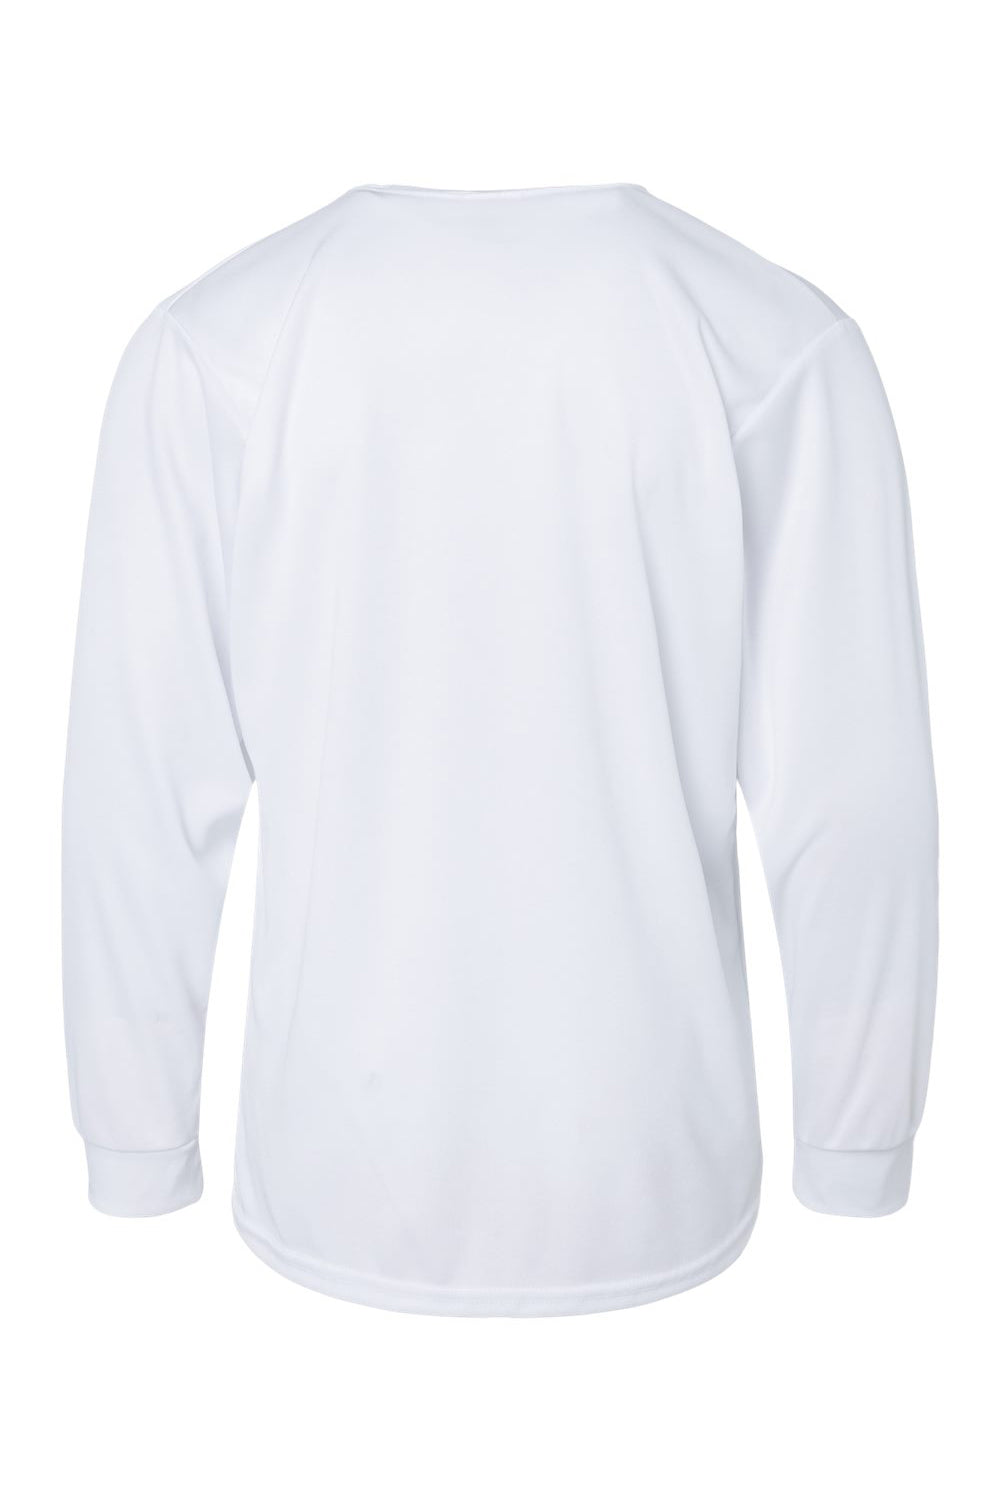 C2 Sport 5204 Youth Performance Moisture Wicking Long Sleeve Crewneck T-Shirt White Flat Back